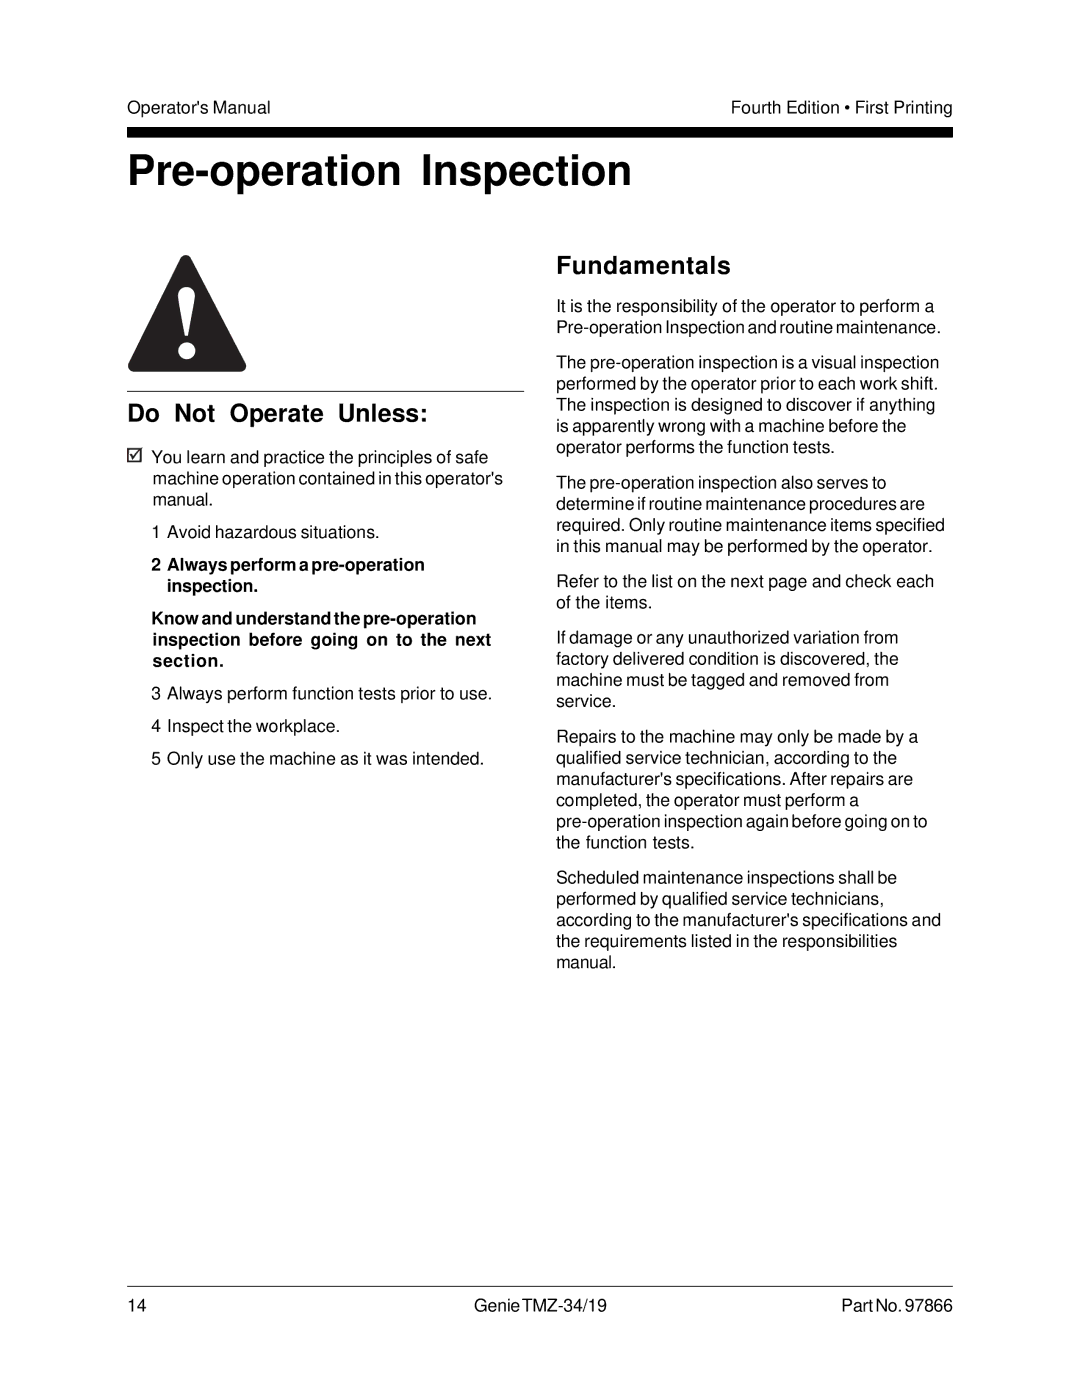 Genie TMZ-34, TMZ-19 manual Pre-operation Inspection, Fundamentals 